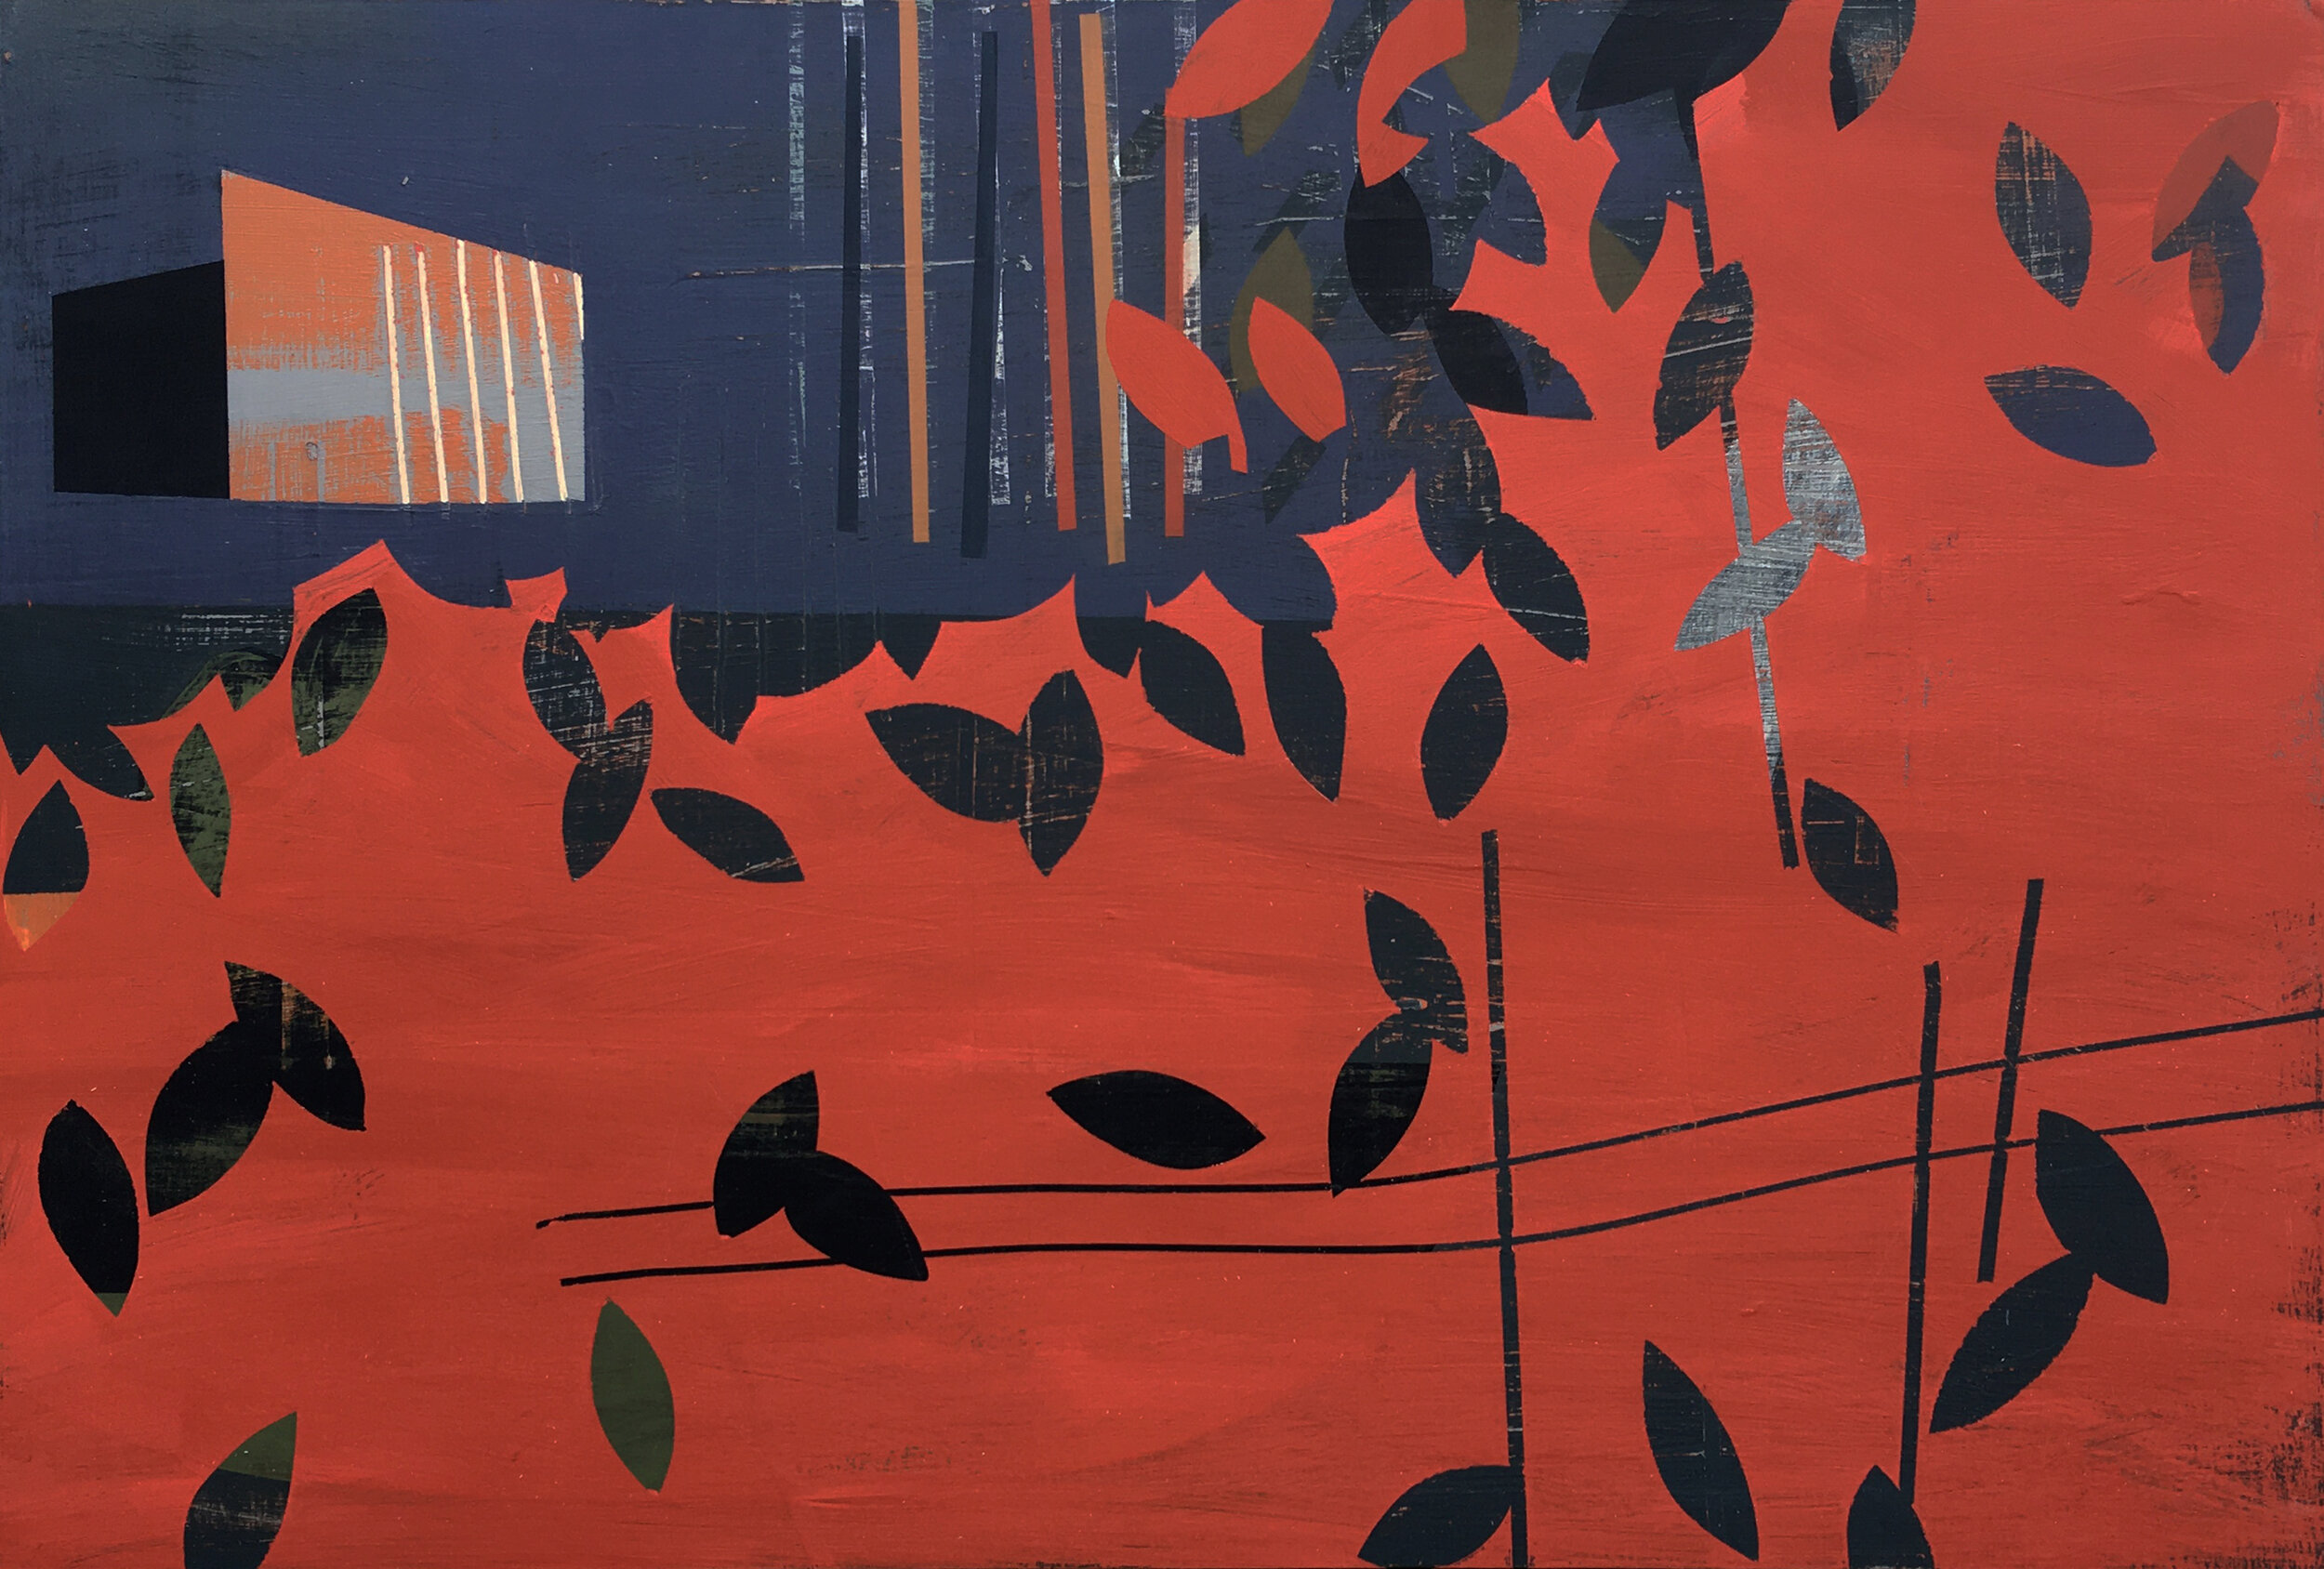 Martin Webb, Inhabit, 2020, Acrylic and mixed media on wood panel, 30 x 40”